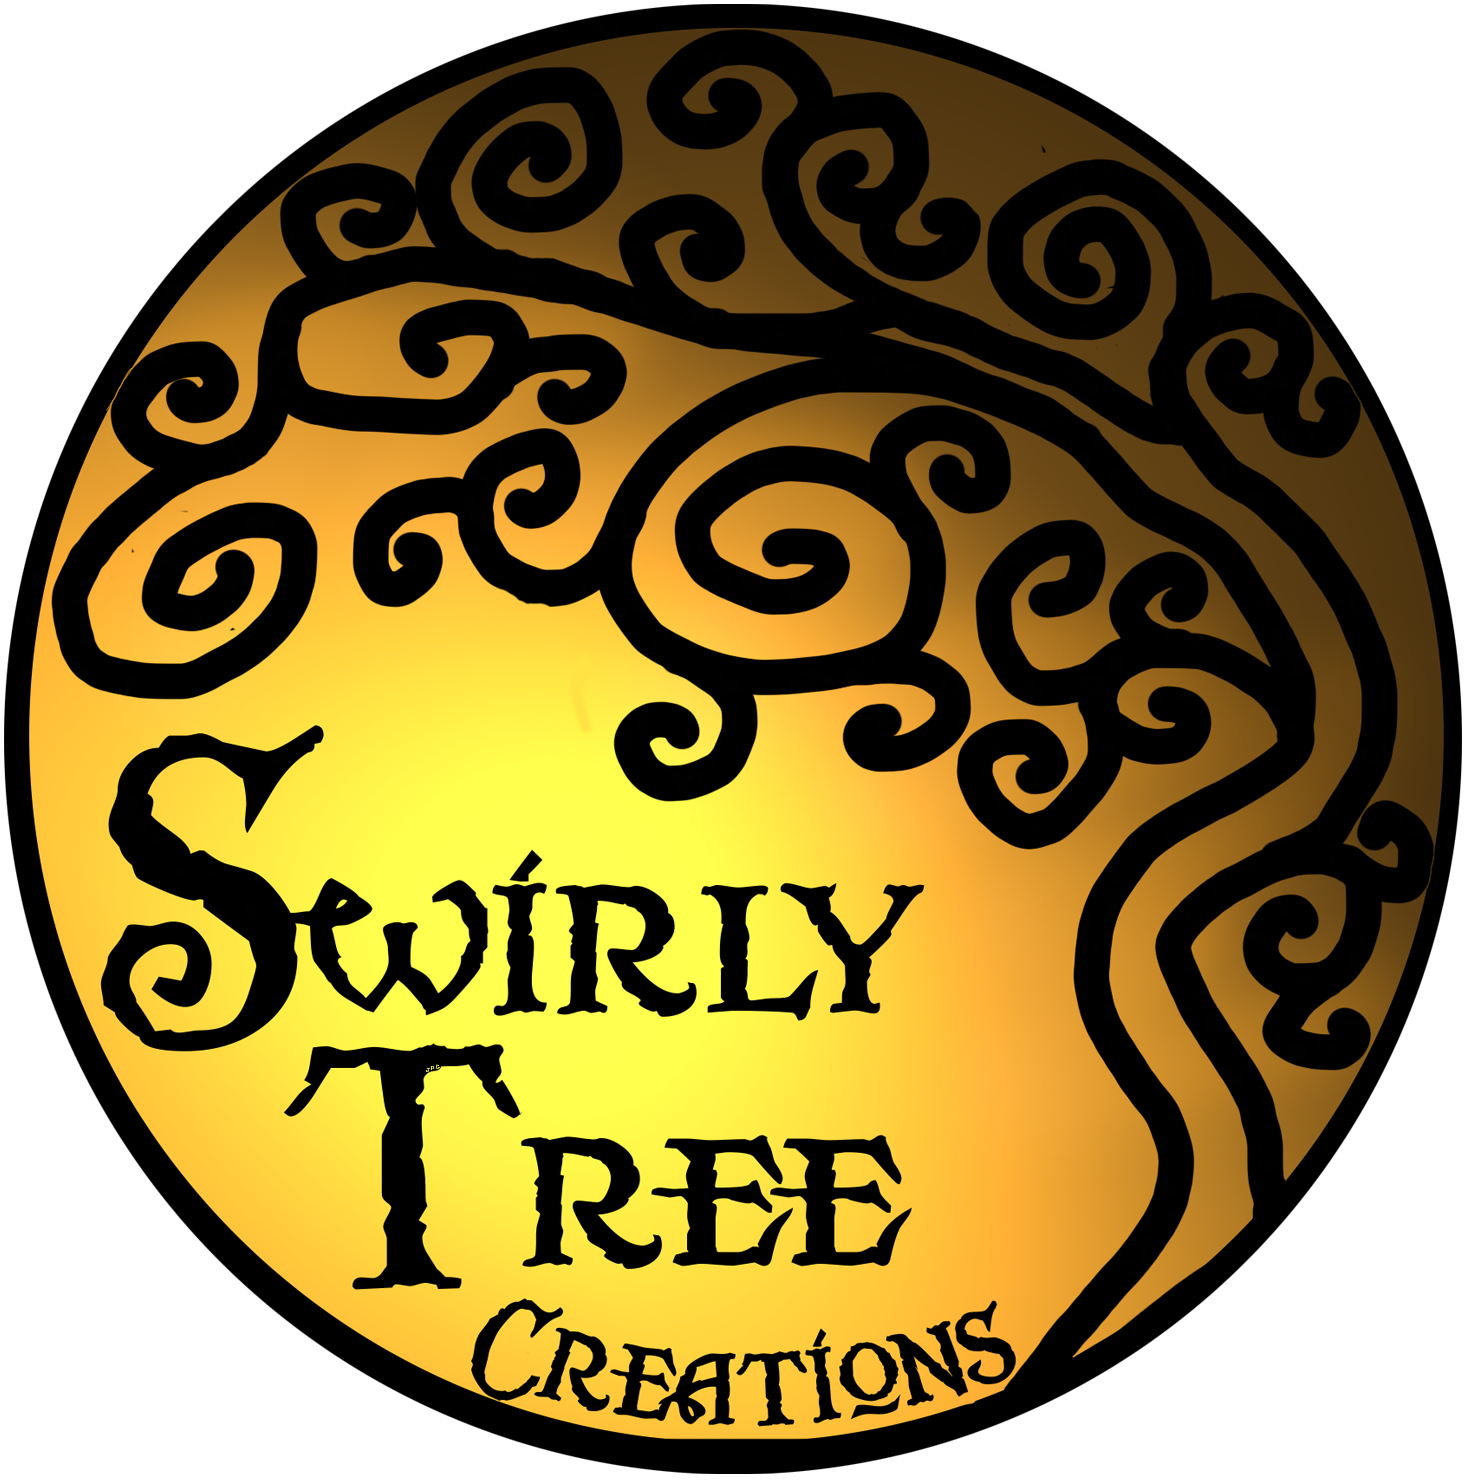 Swirly Tree Creations